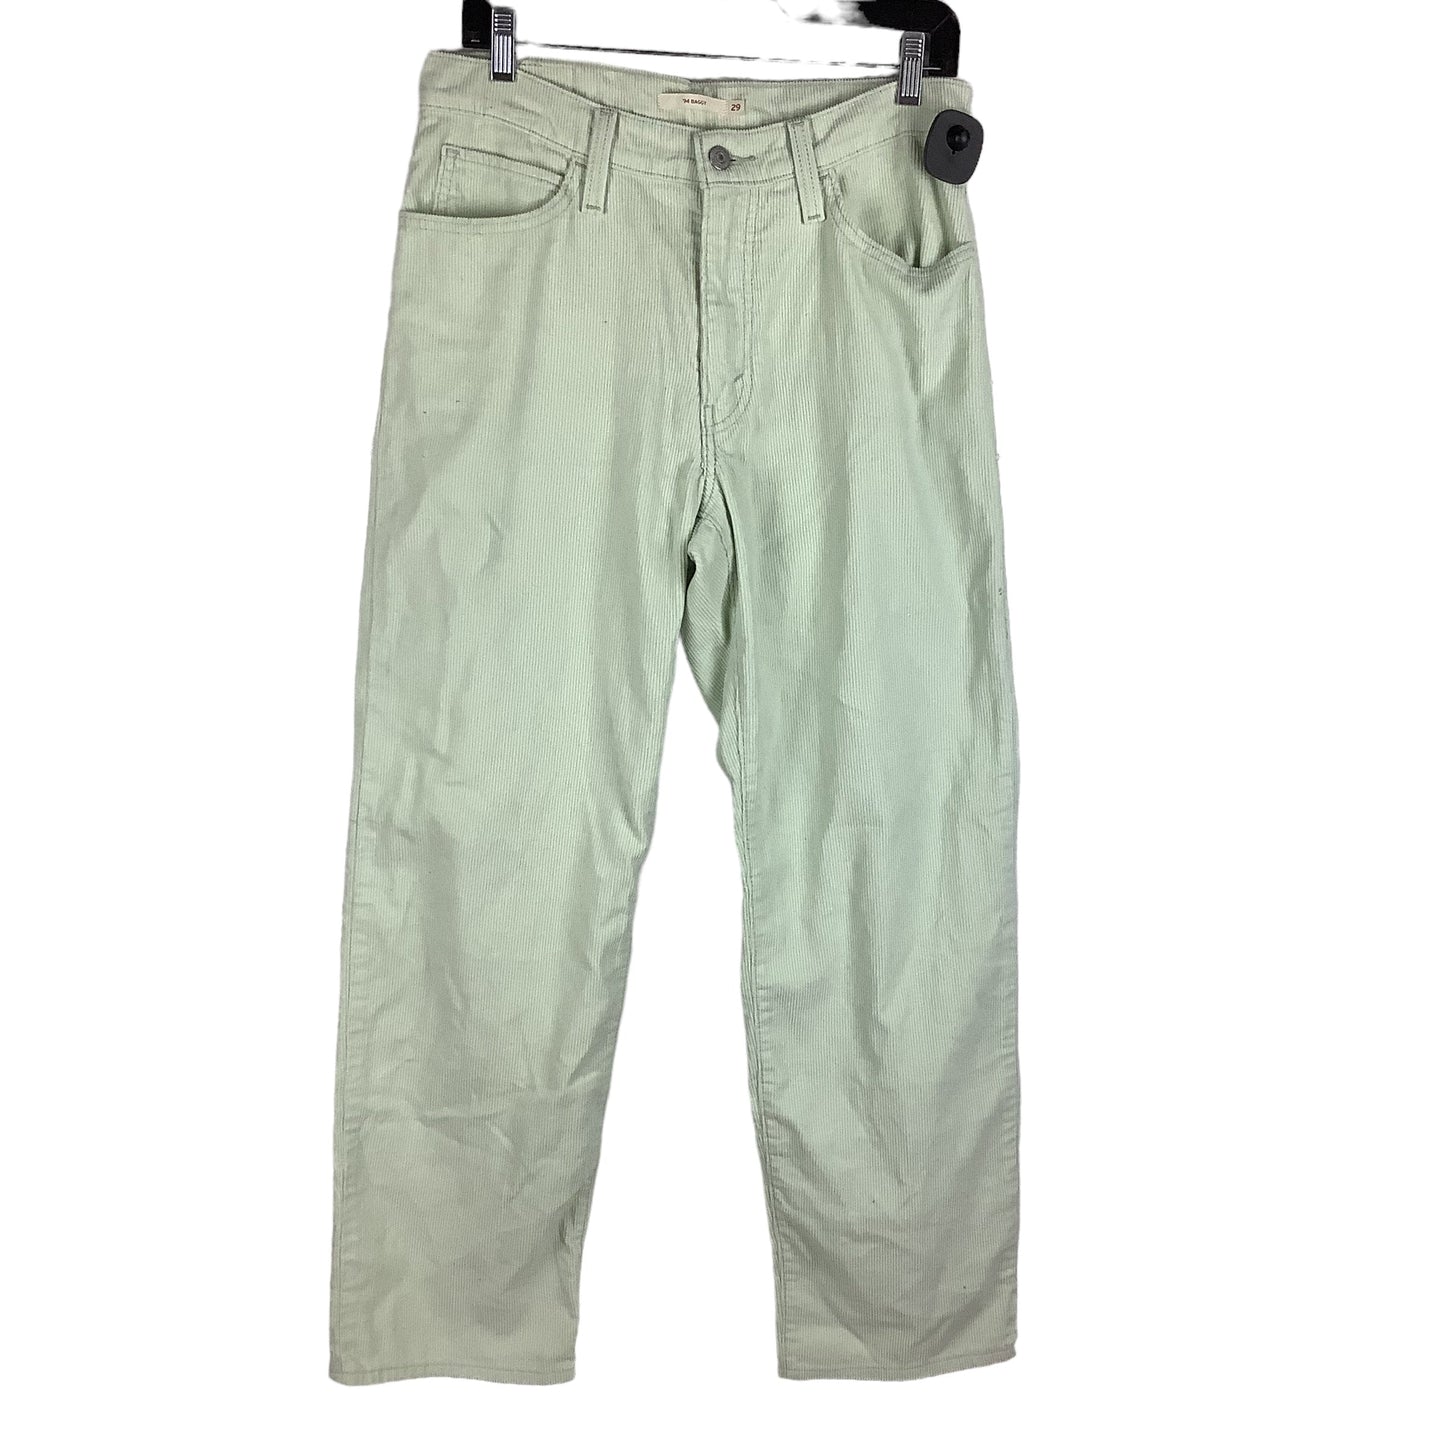 Green Pants Corduroy Levis, Size 8 (29)